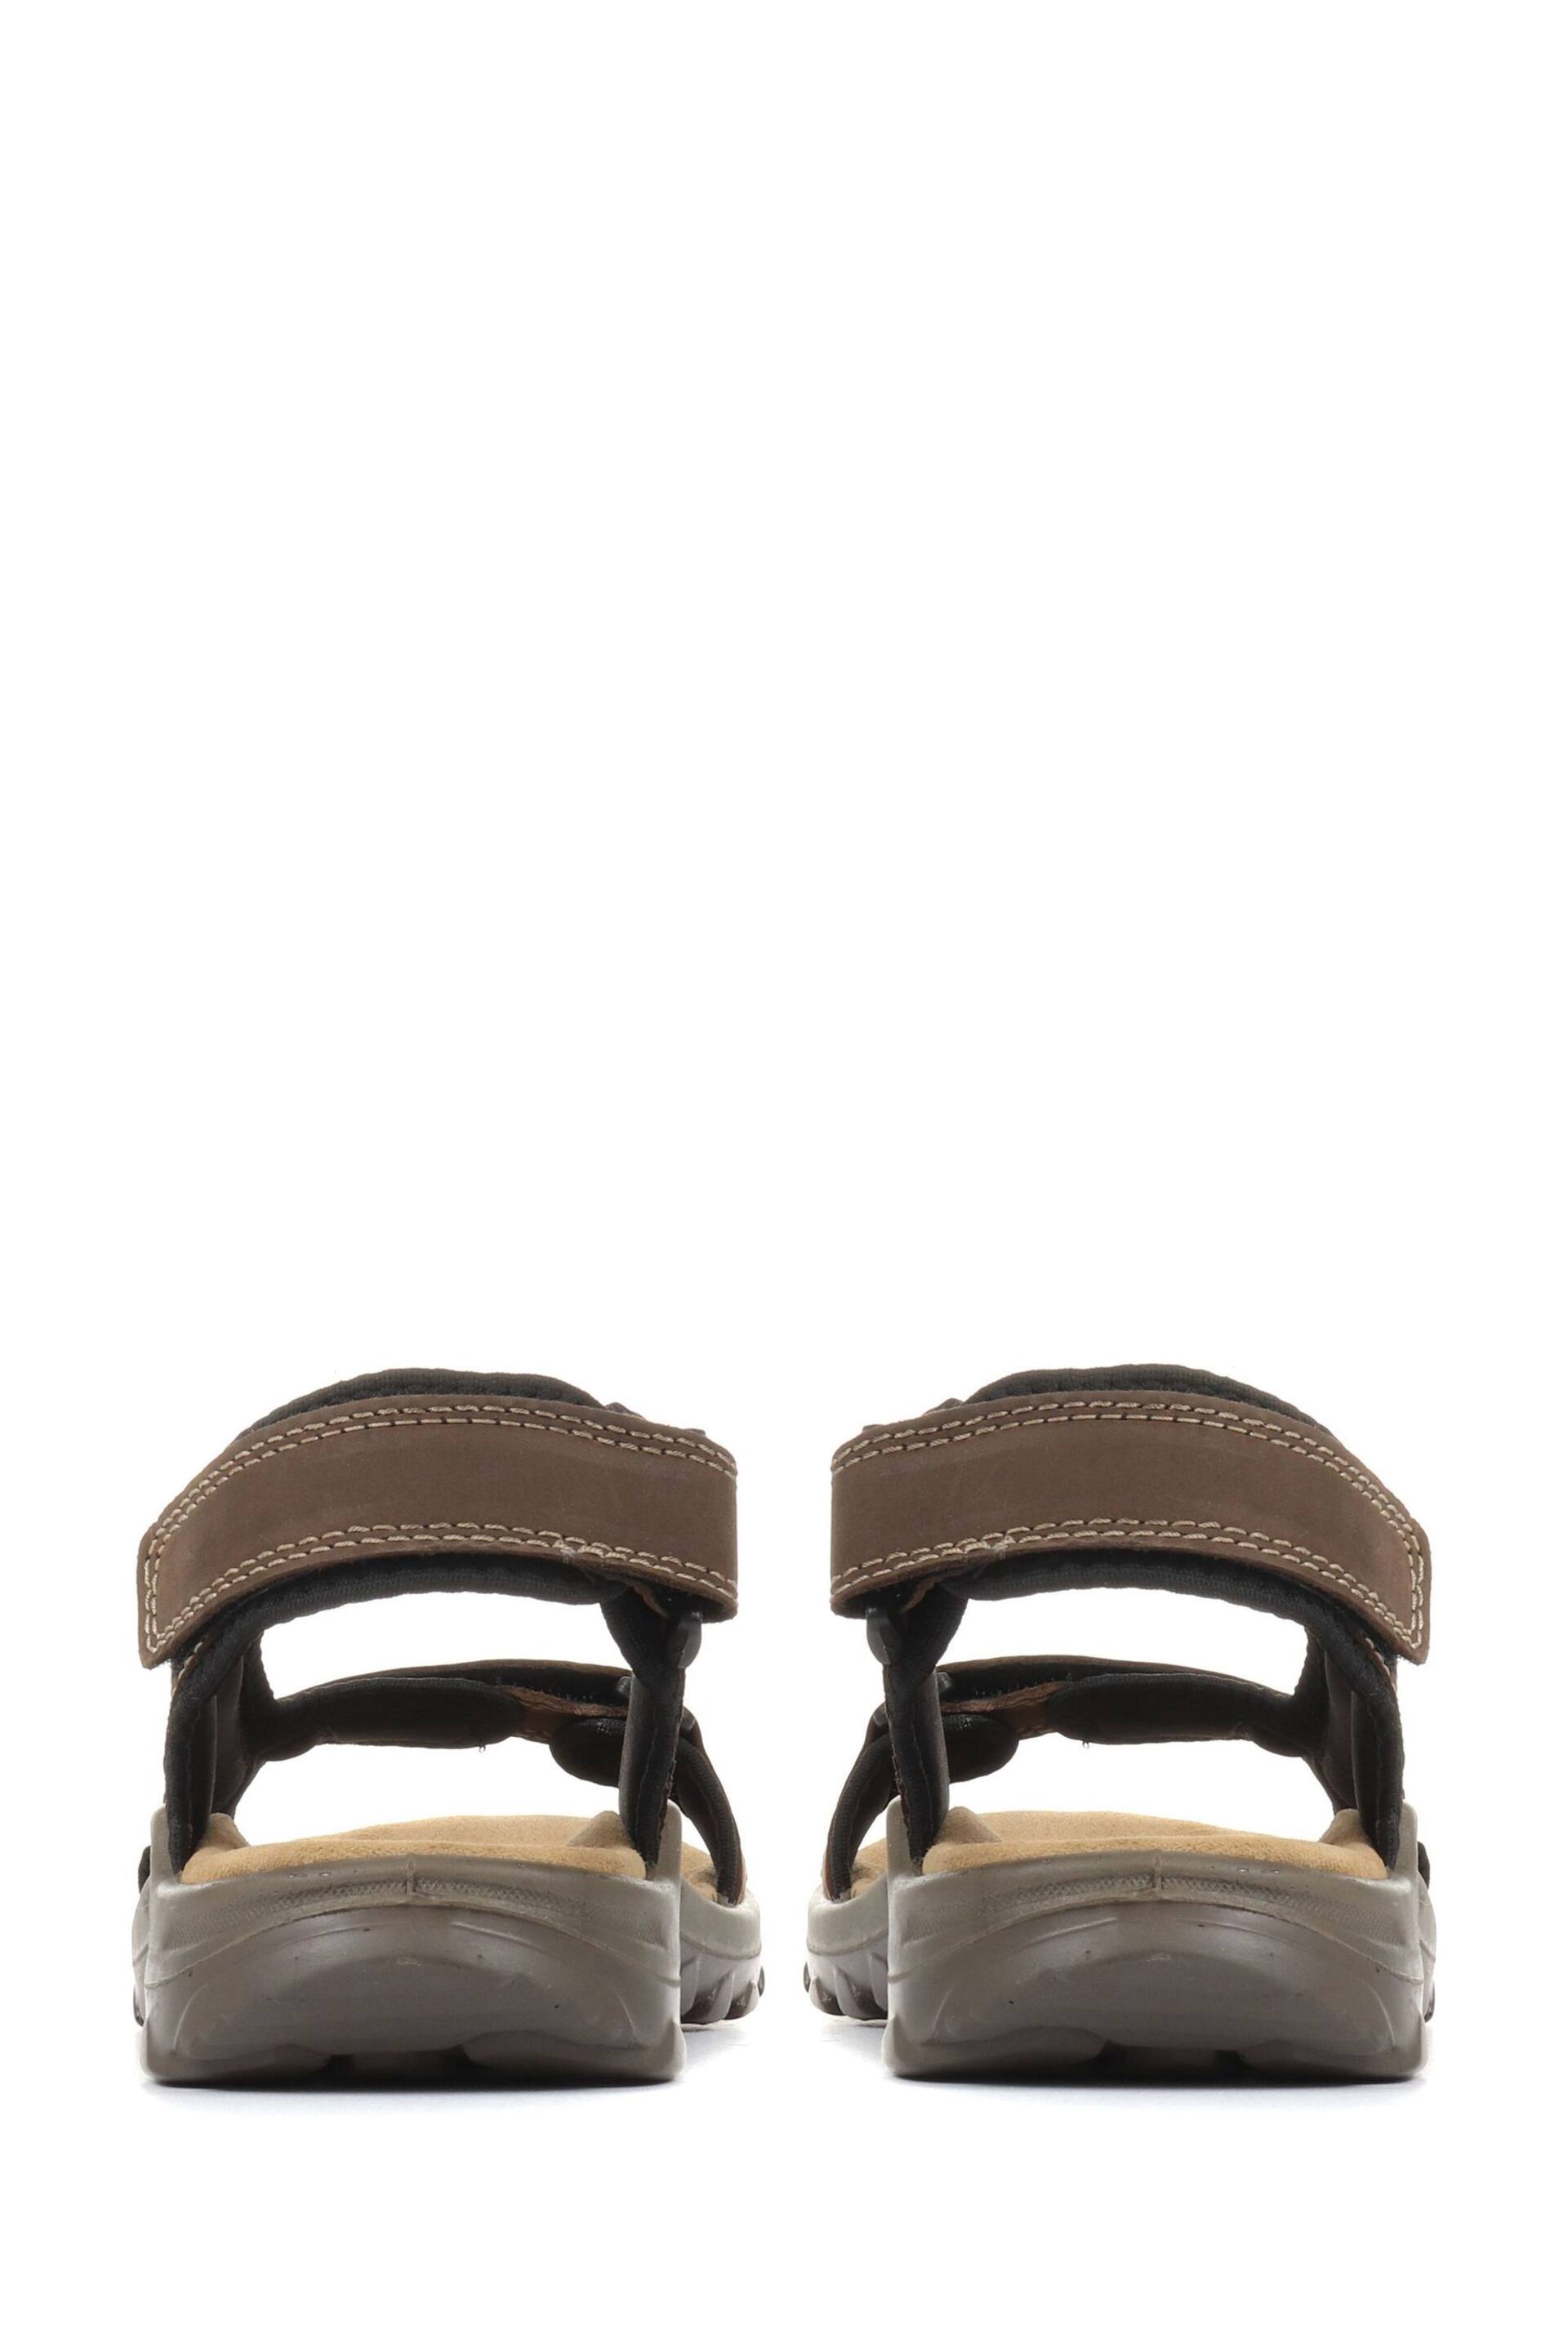 Pavers Adjustable Leather Walking Sandals - Image 2 of 5